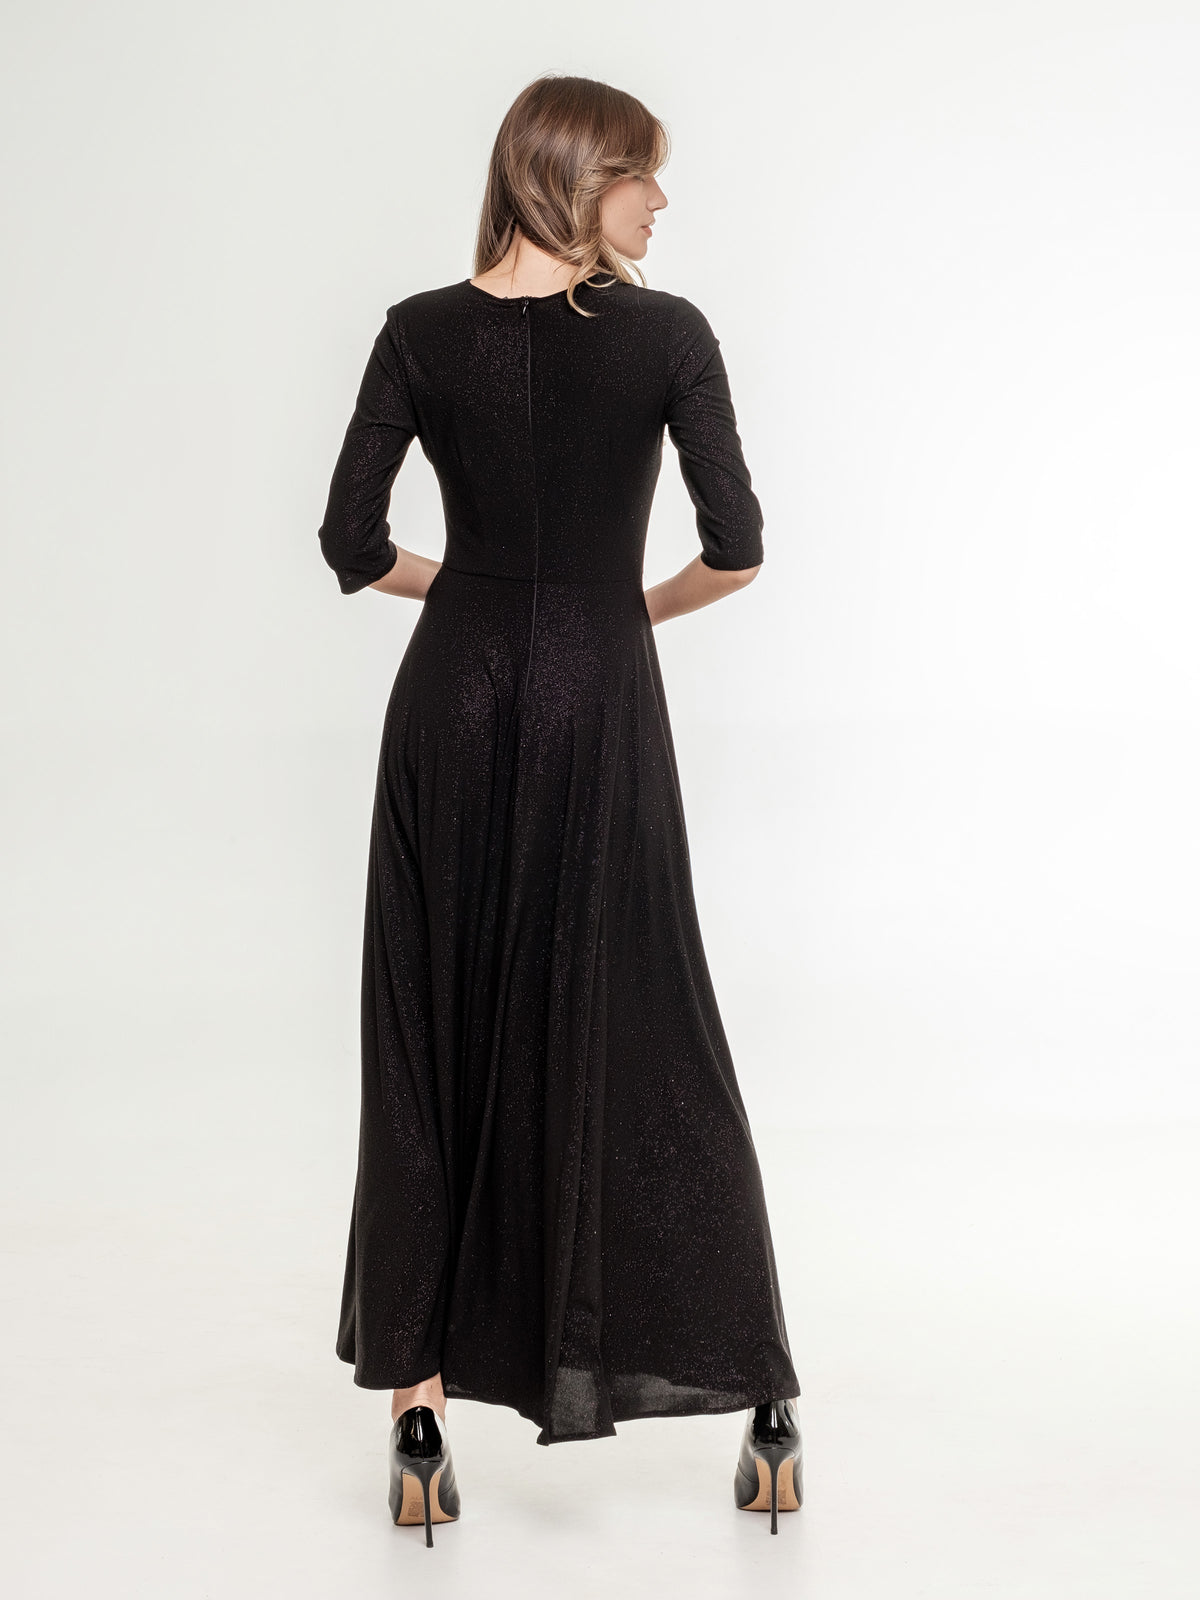 black glossy long dress medium long sleeves wide skirt with underlining back zipper